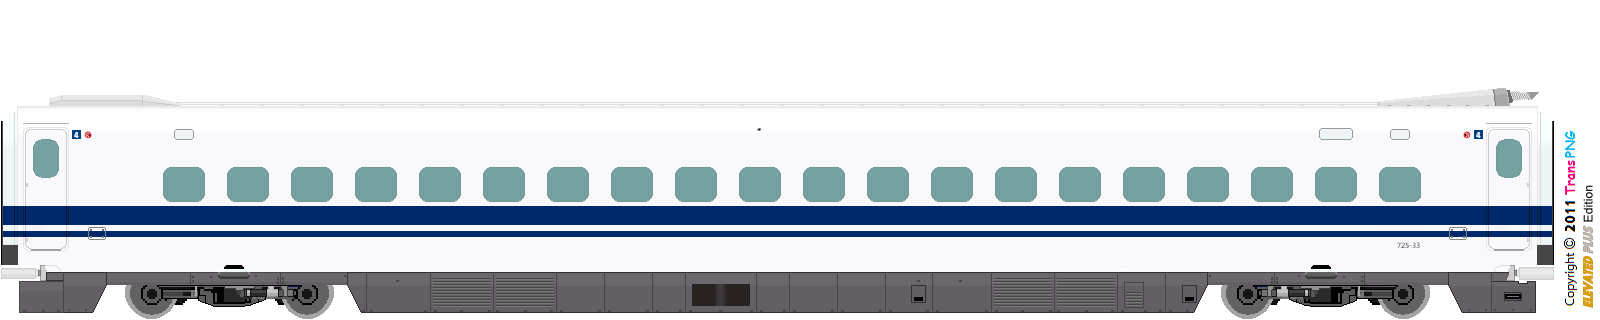 9010 - [9010] Central Japan Railway 52288069175_1b4762b56e_o